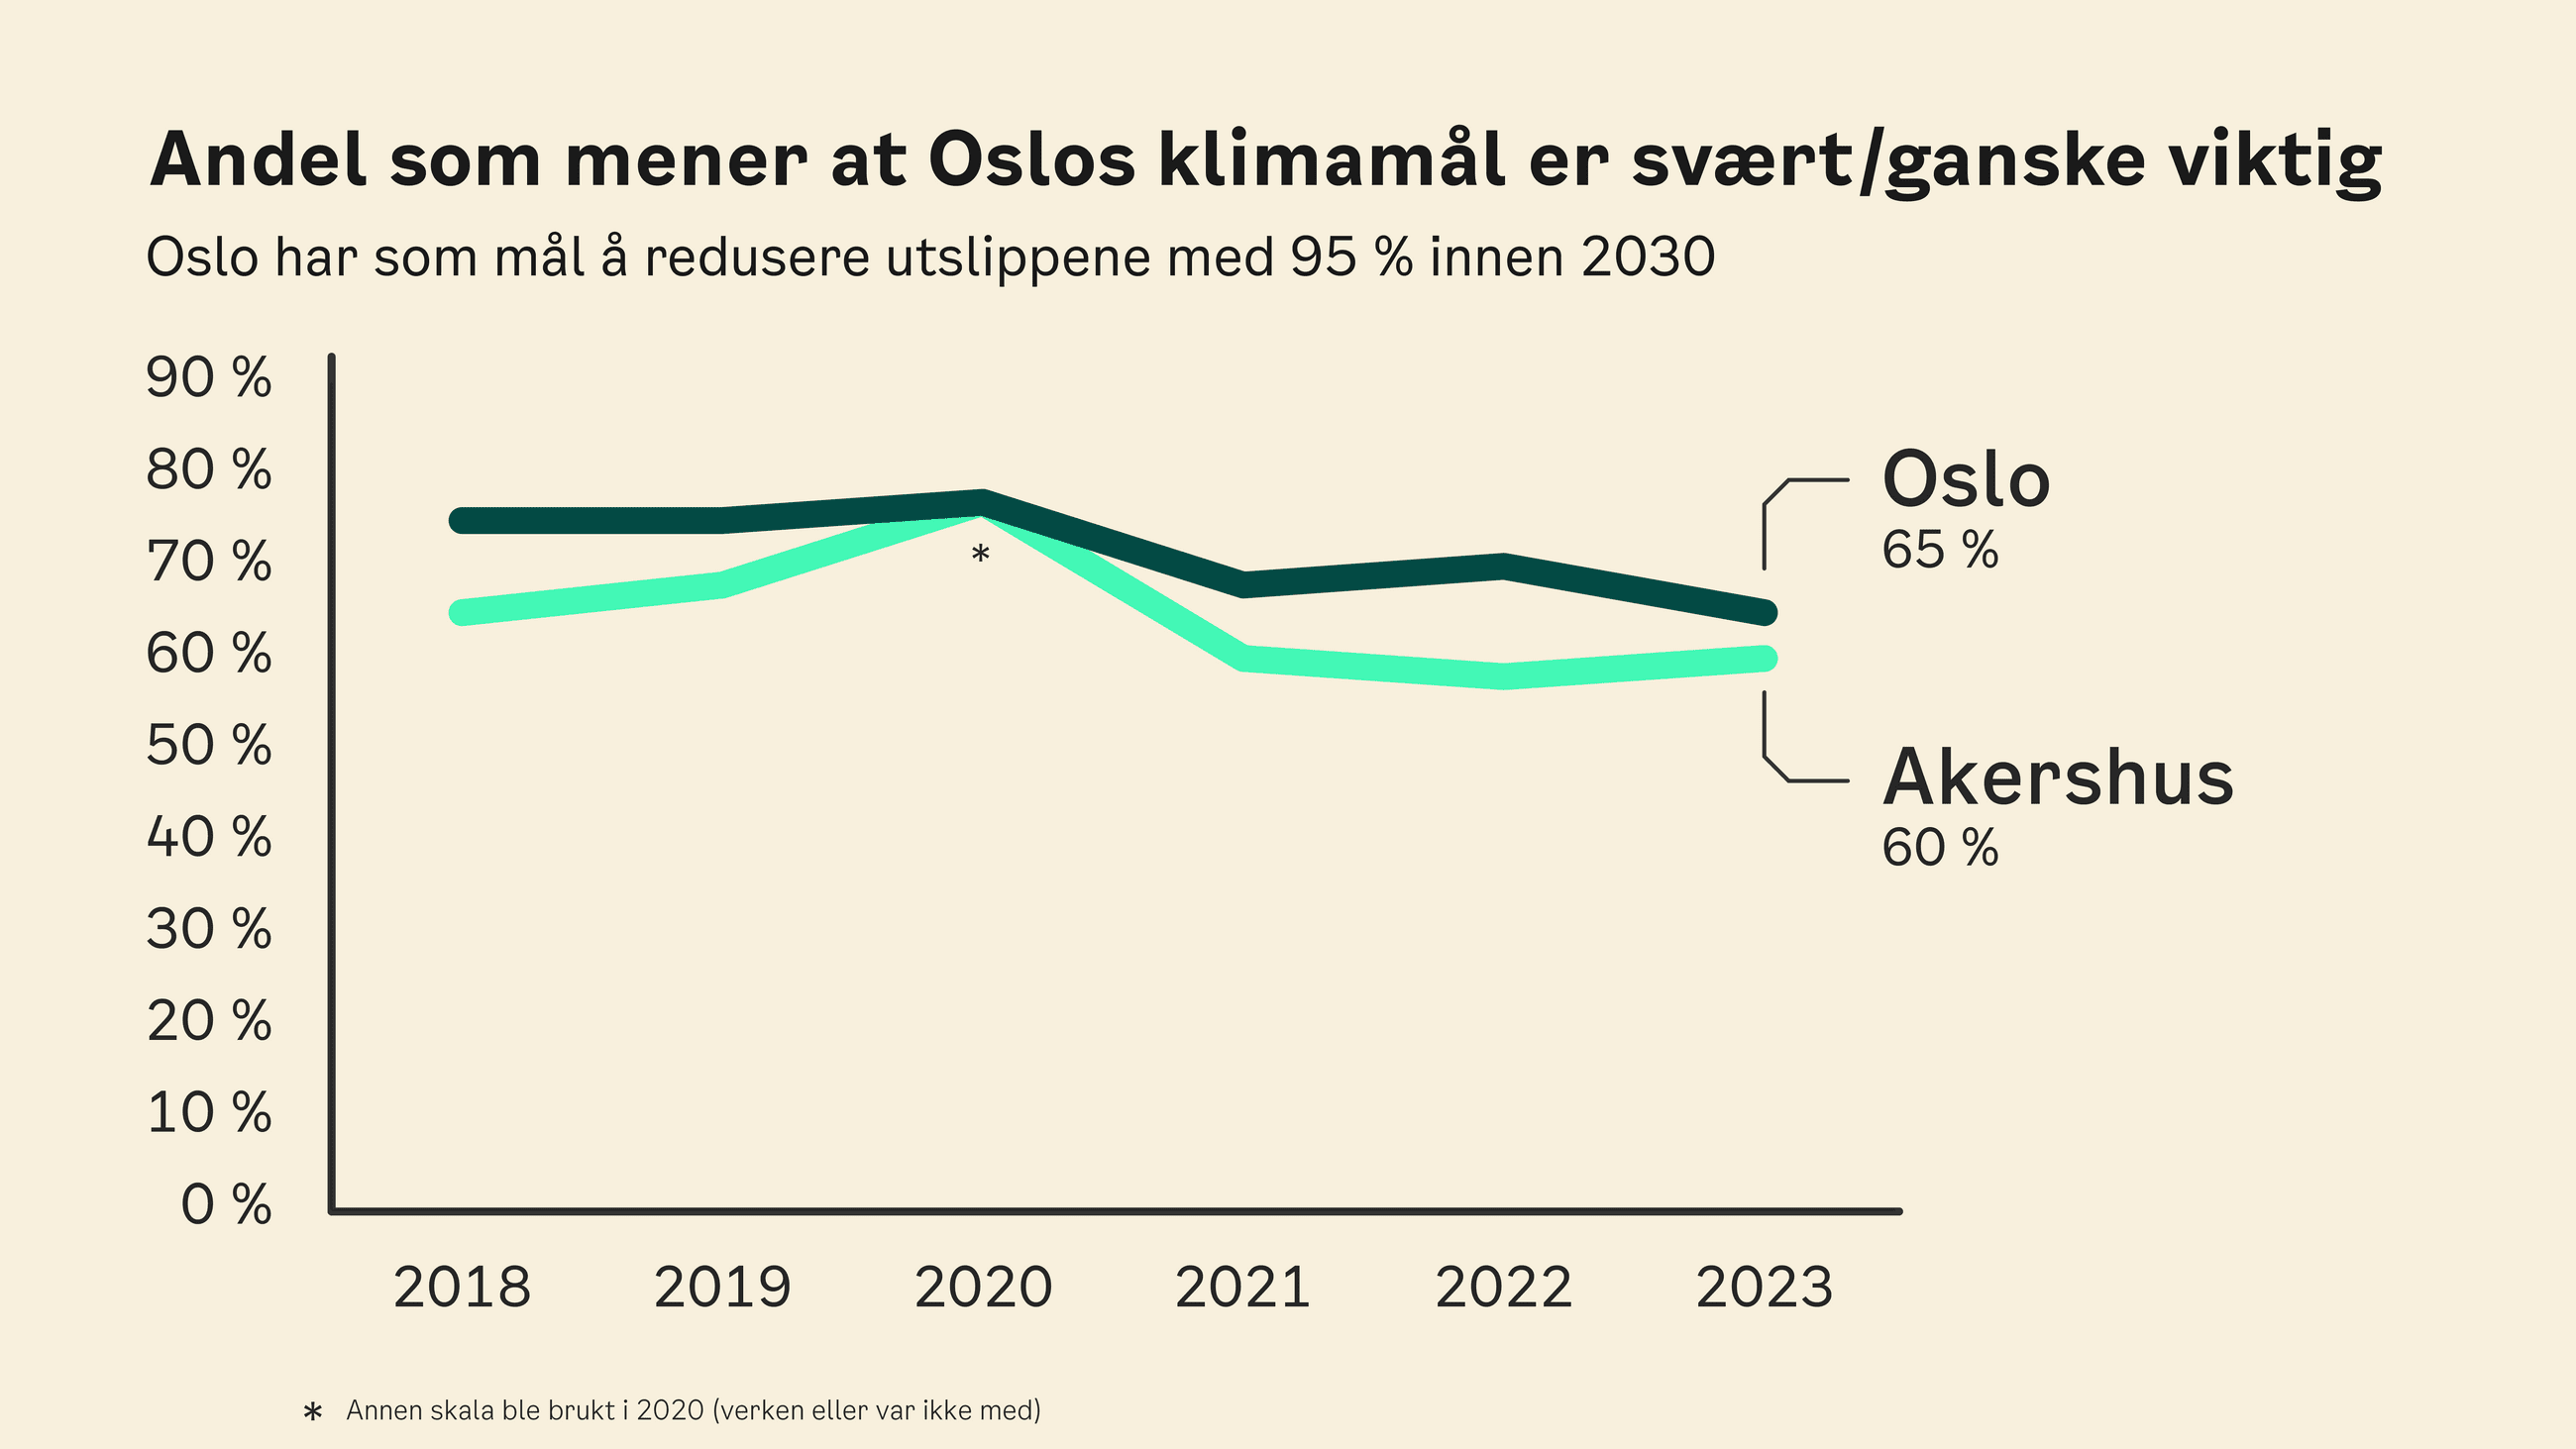 Graf som viser hvor mange som har svart at Oslo klimamål er viktig i Oslo og Akershus siden 2018.